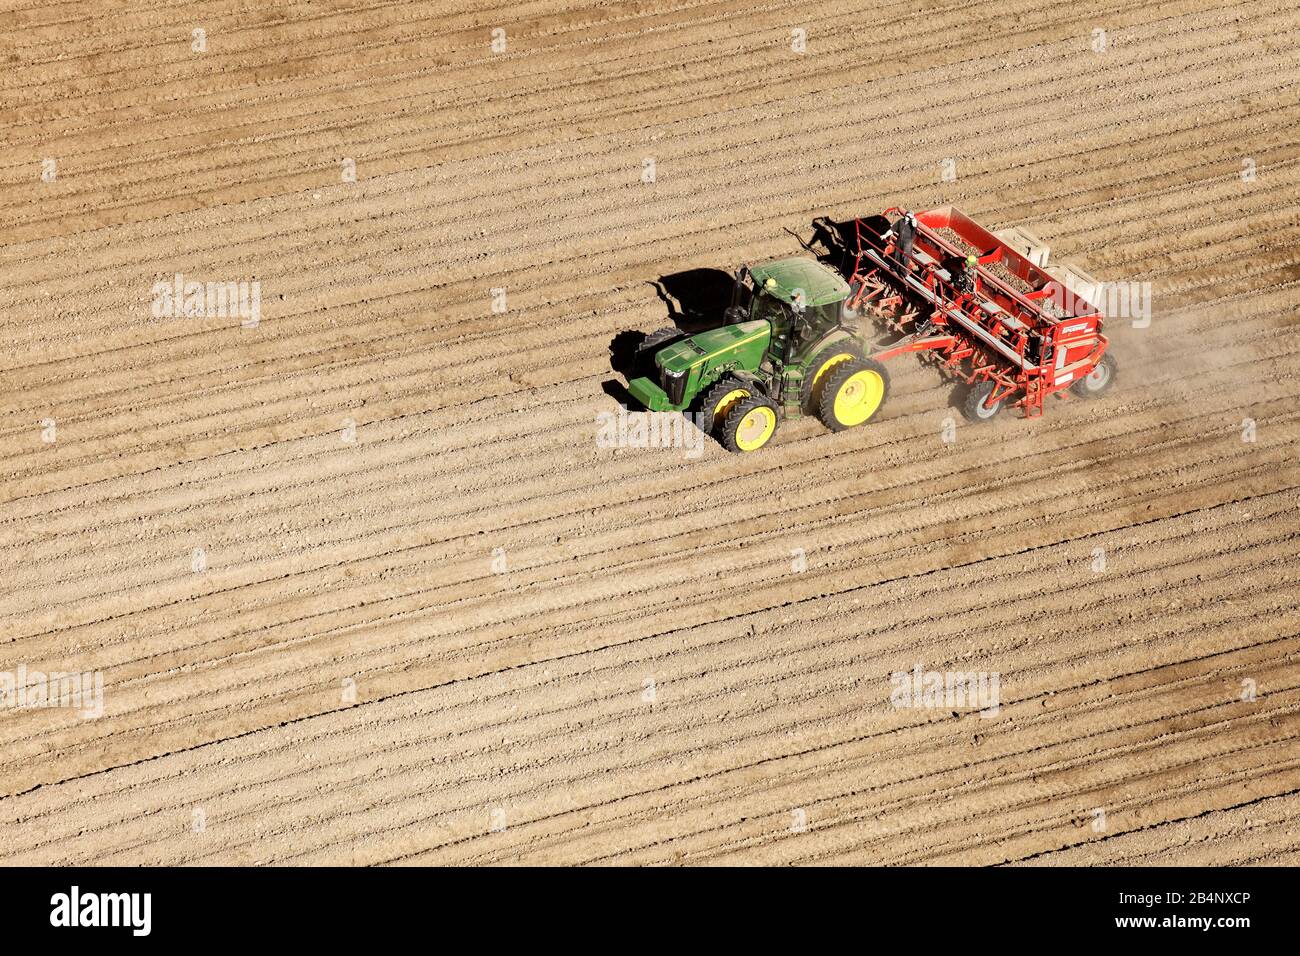 American Falls, Idaho, USA Apr. 17, 2015 An aerial view of farm machinery planting potatoes in the fertile farm fields of Idaho. Stock Photo